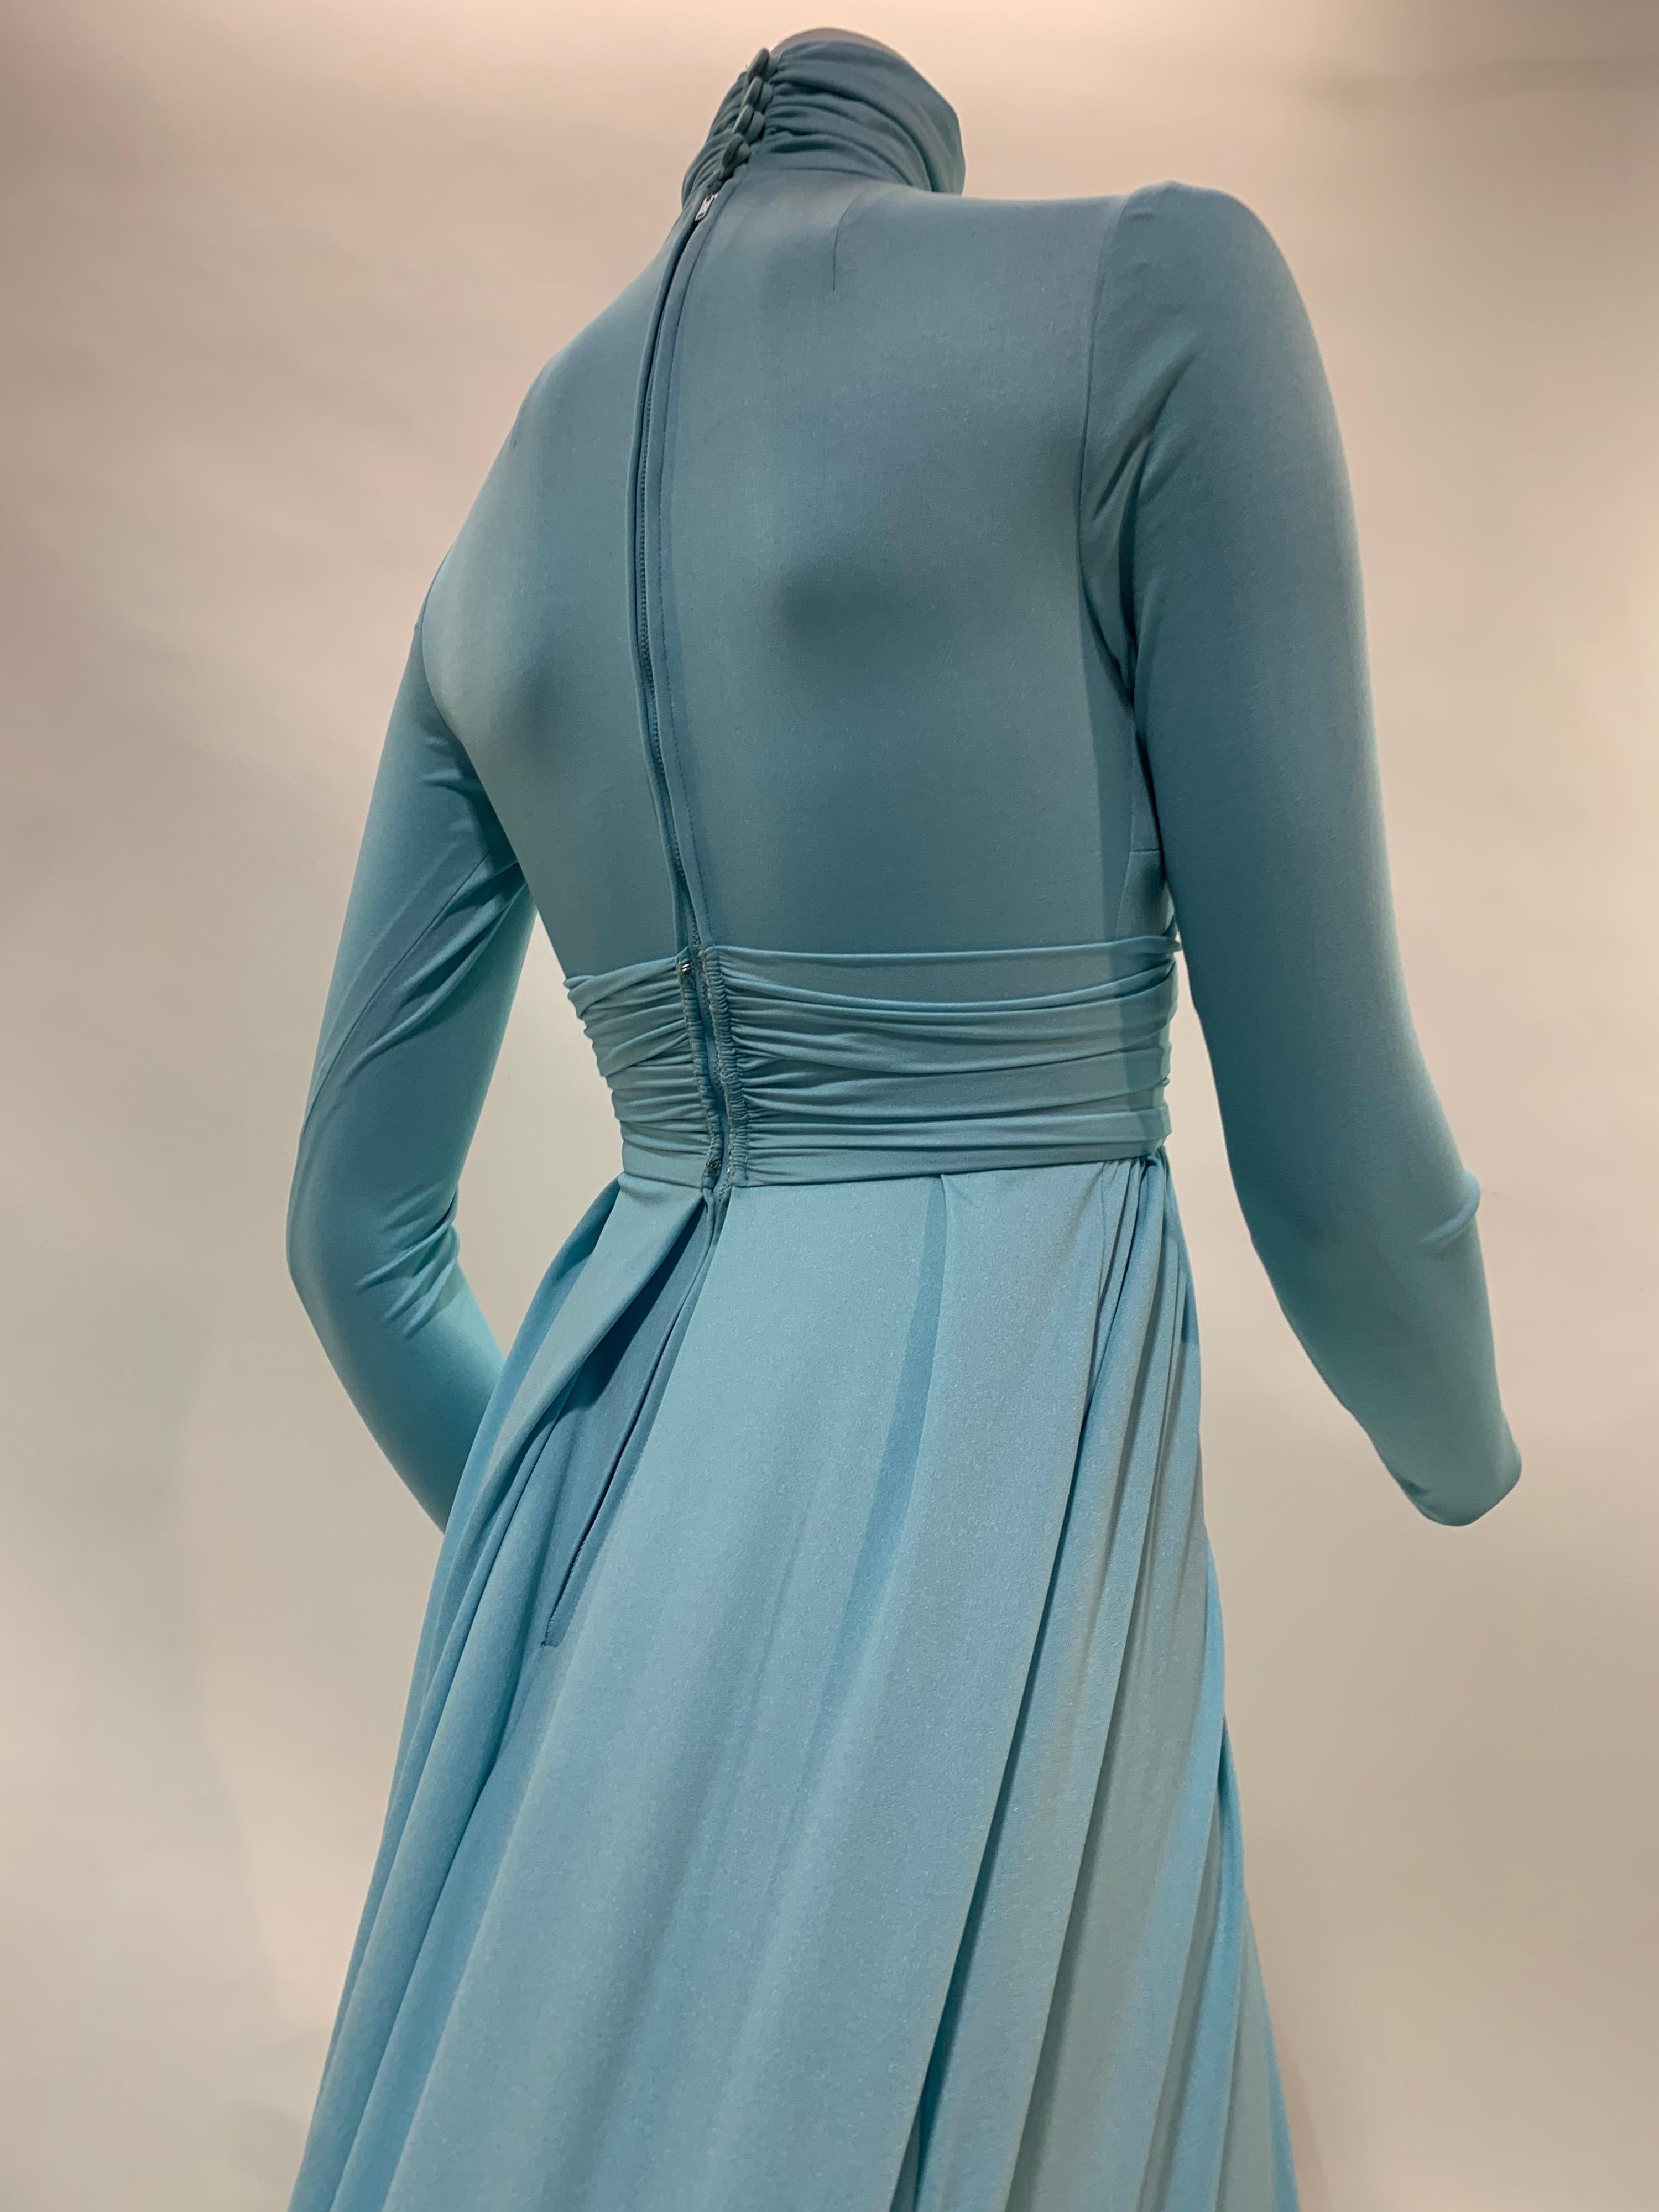 1970 Lillie Rubin Aquamarine Knit Maxi Dress w/ High Neck & Jeweled Centerpiece  For Sale 4